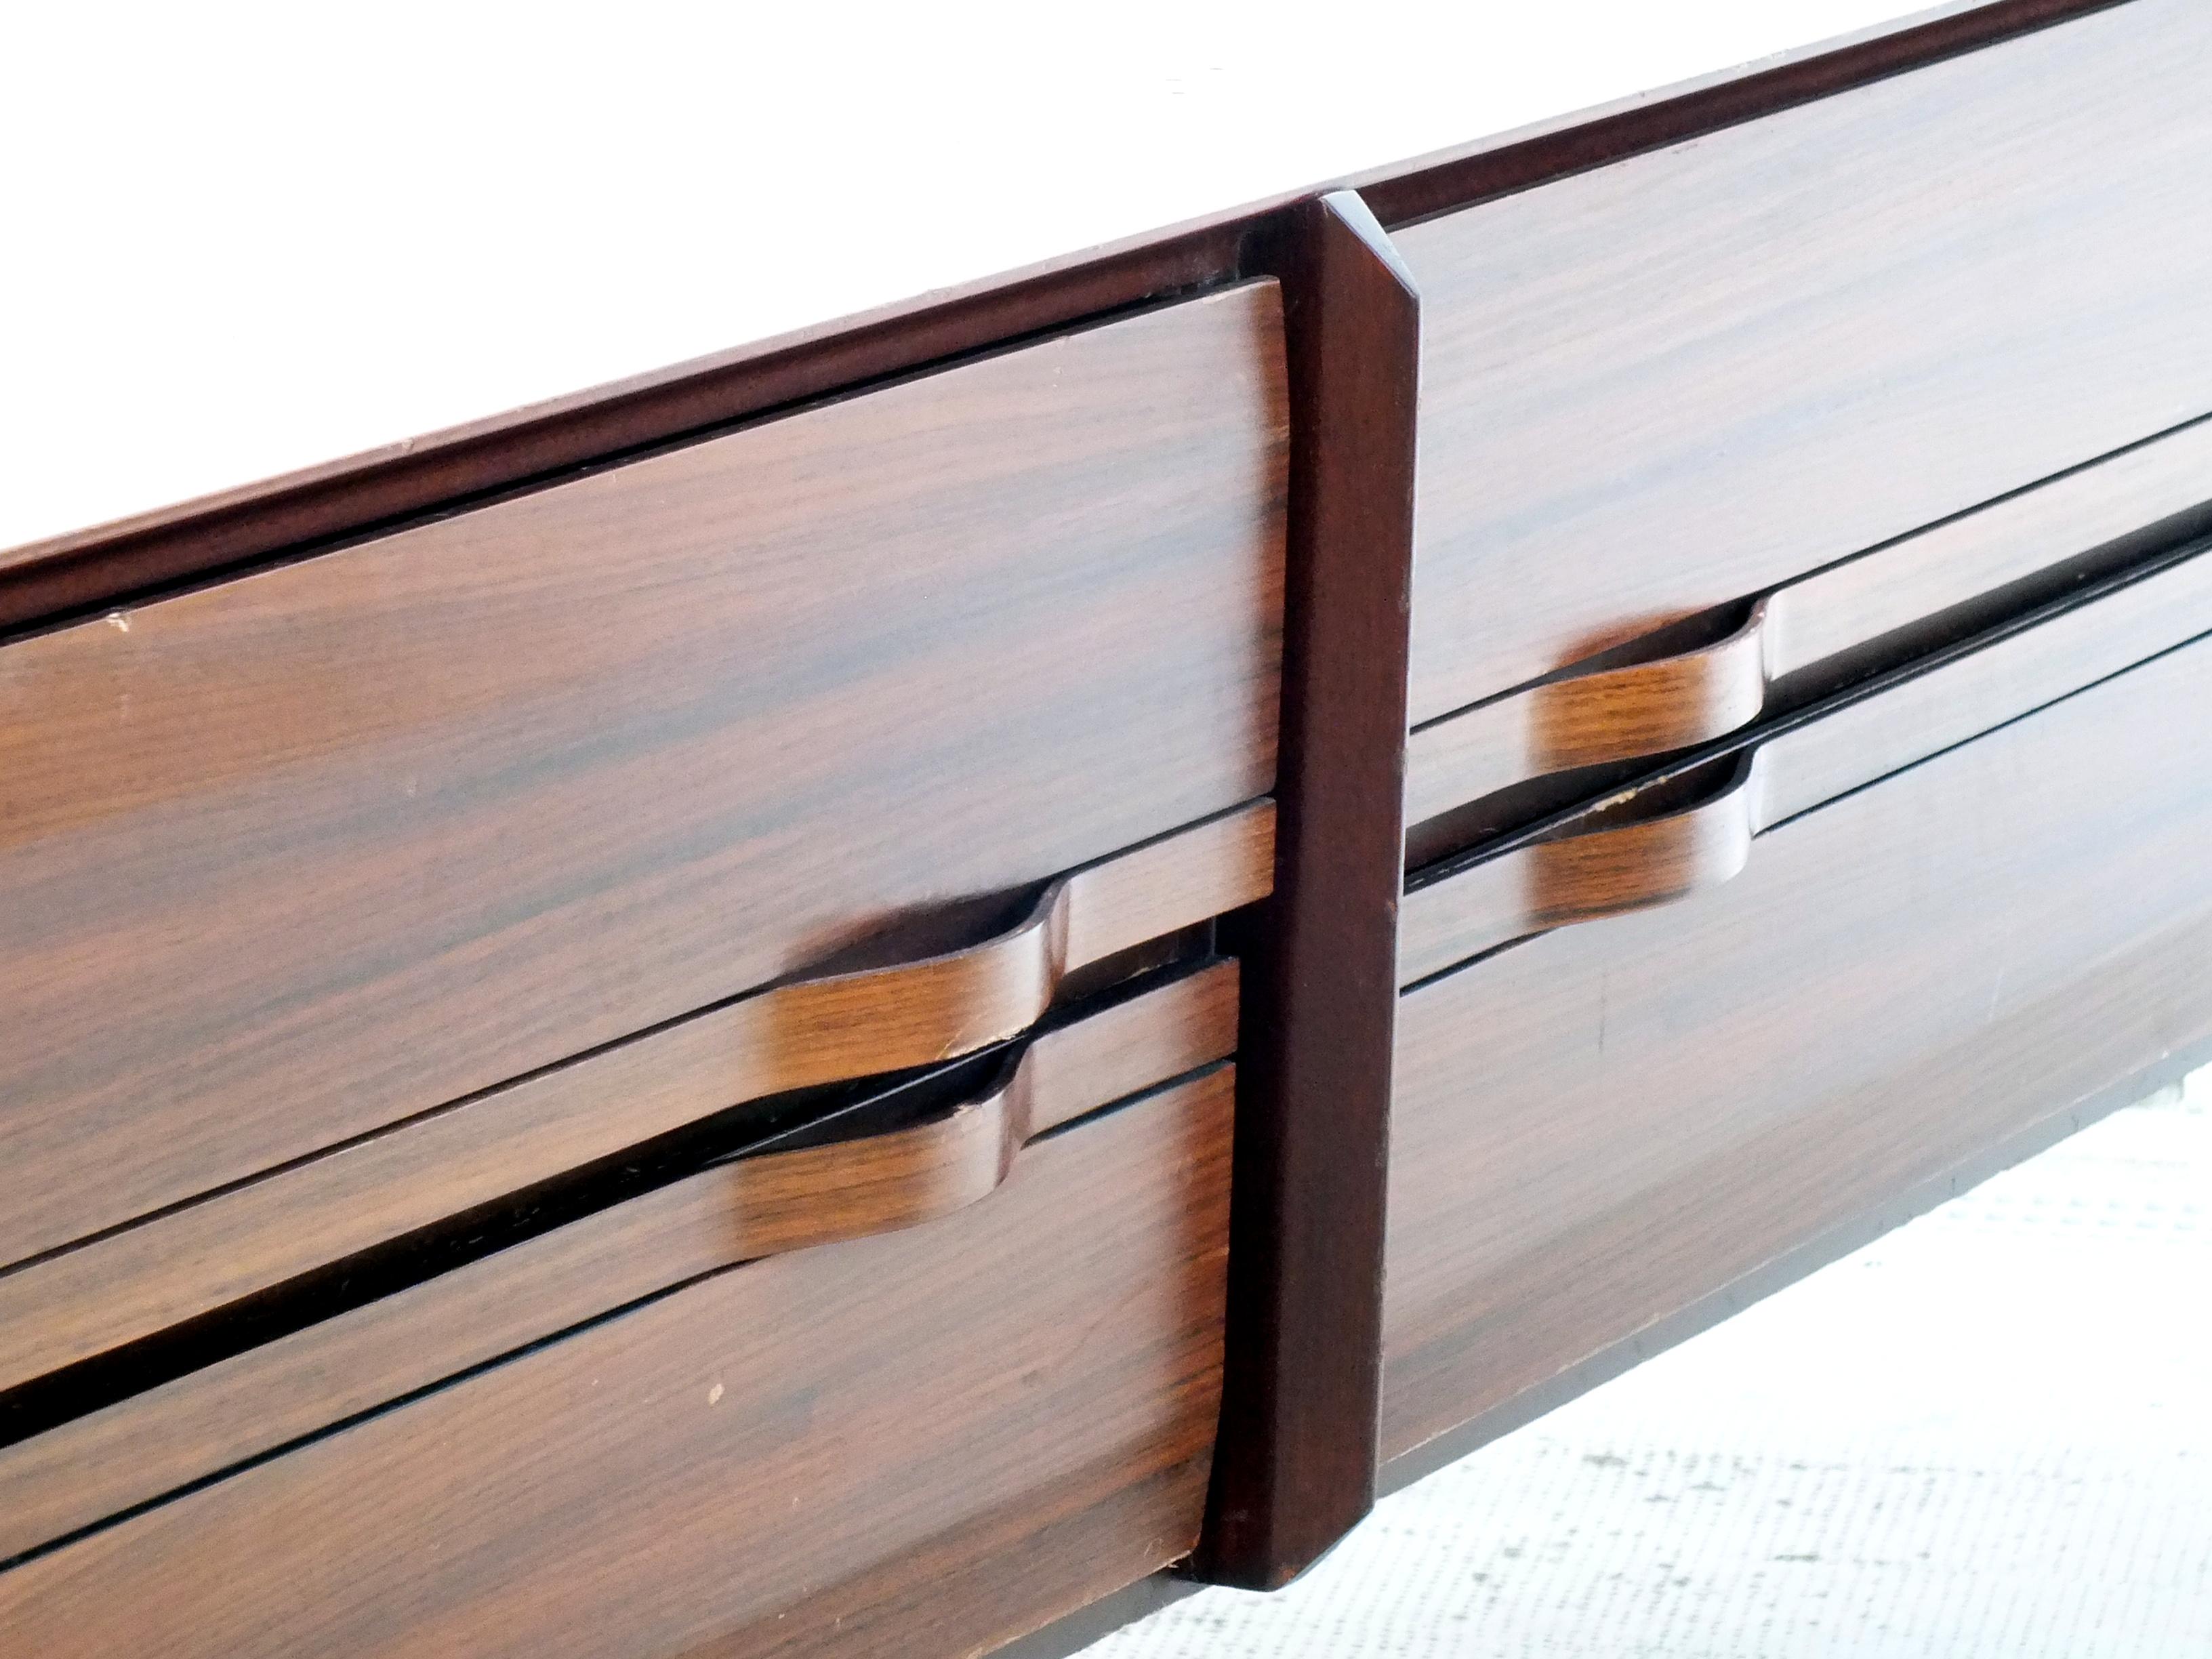 La Permanente meuble Cantu' Italy minimalist sideboard probable Frattini design  For Sale 8